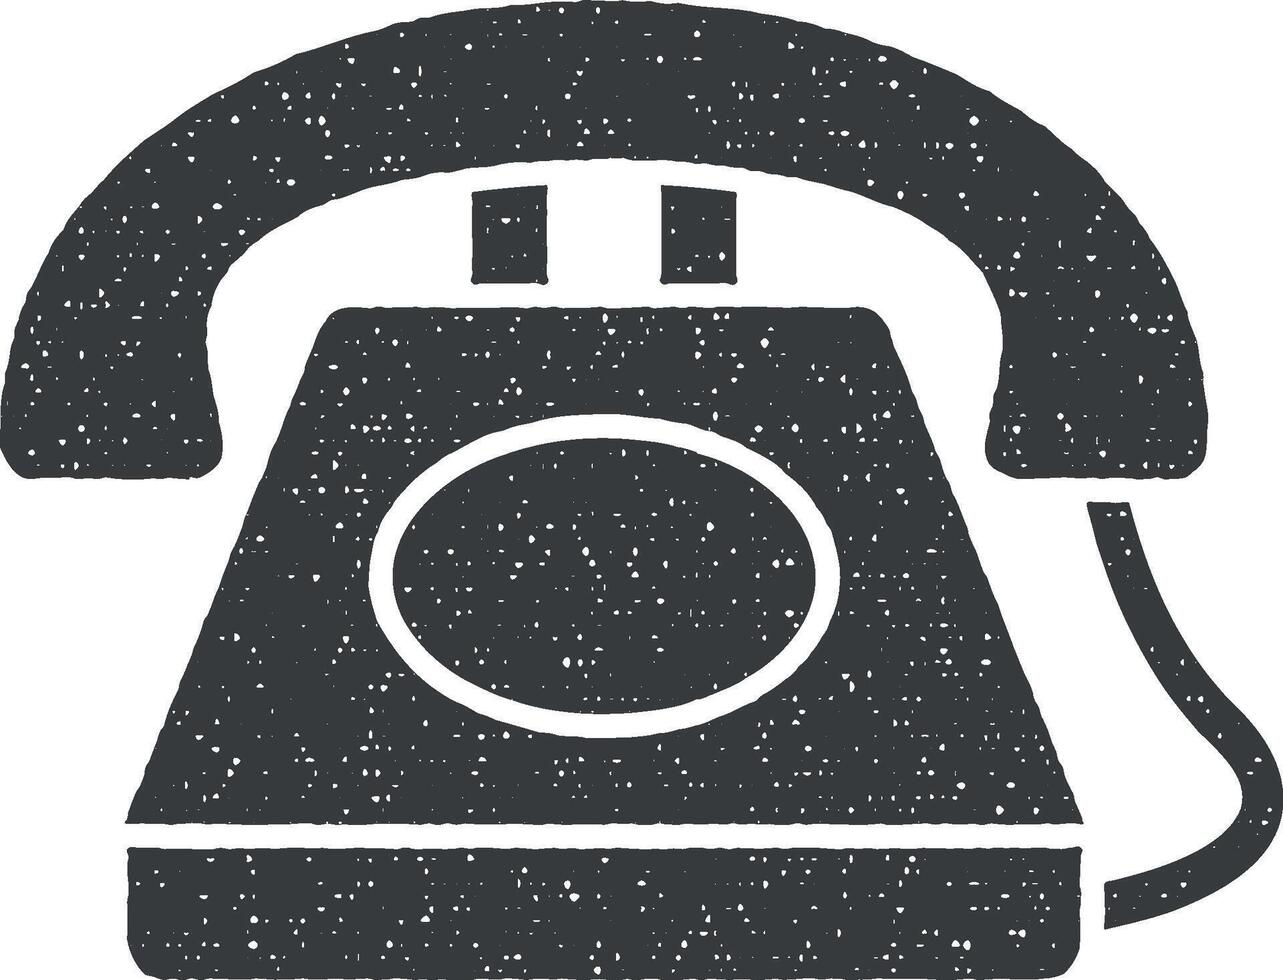 Telefone vintage telefone ícone vetor ilustração dentro carimbo estilo